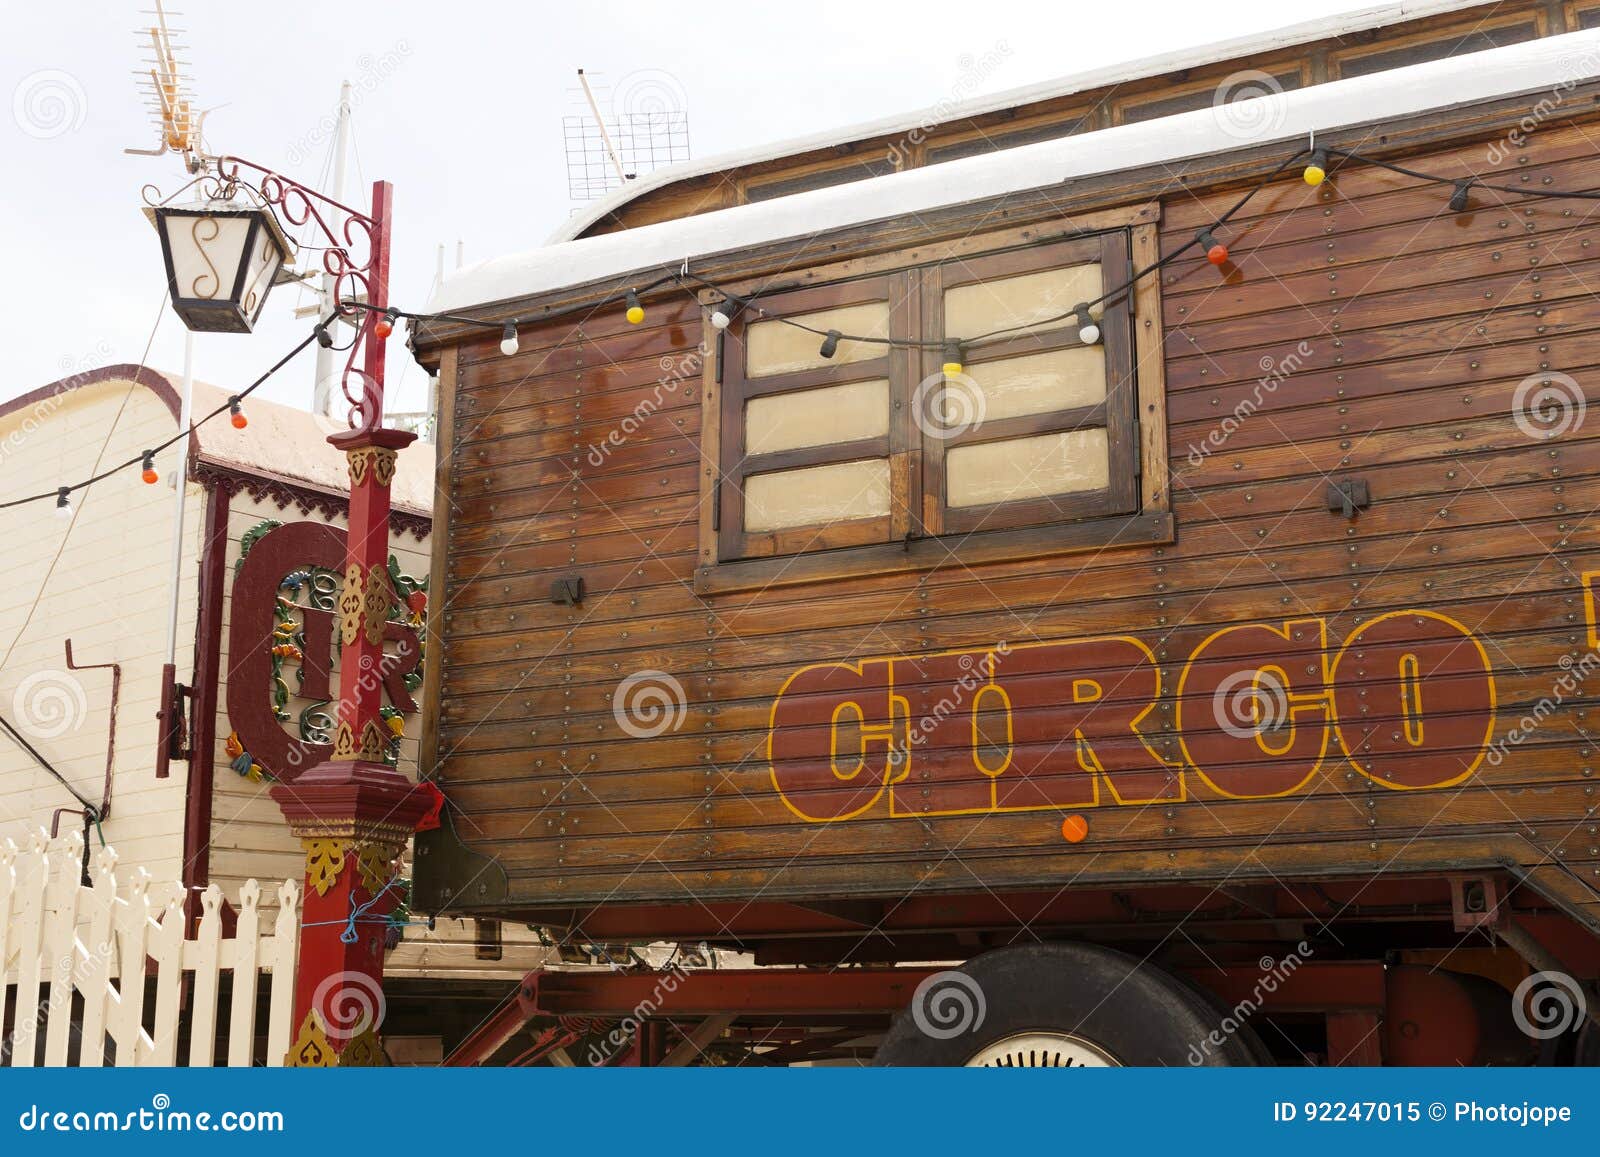 circus caravan with spanish circo lettering